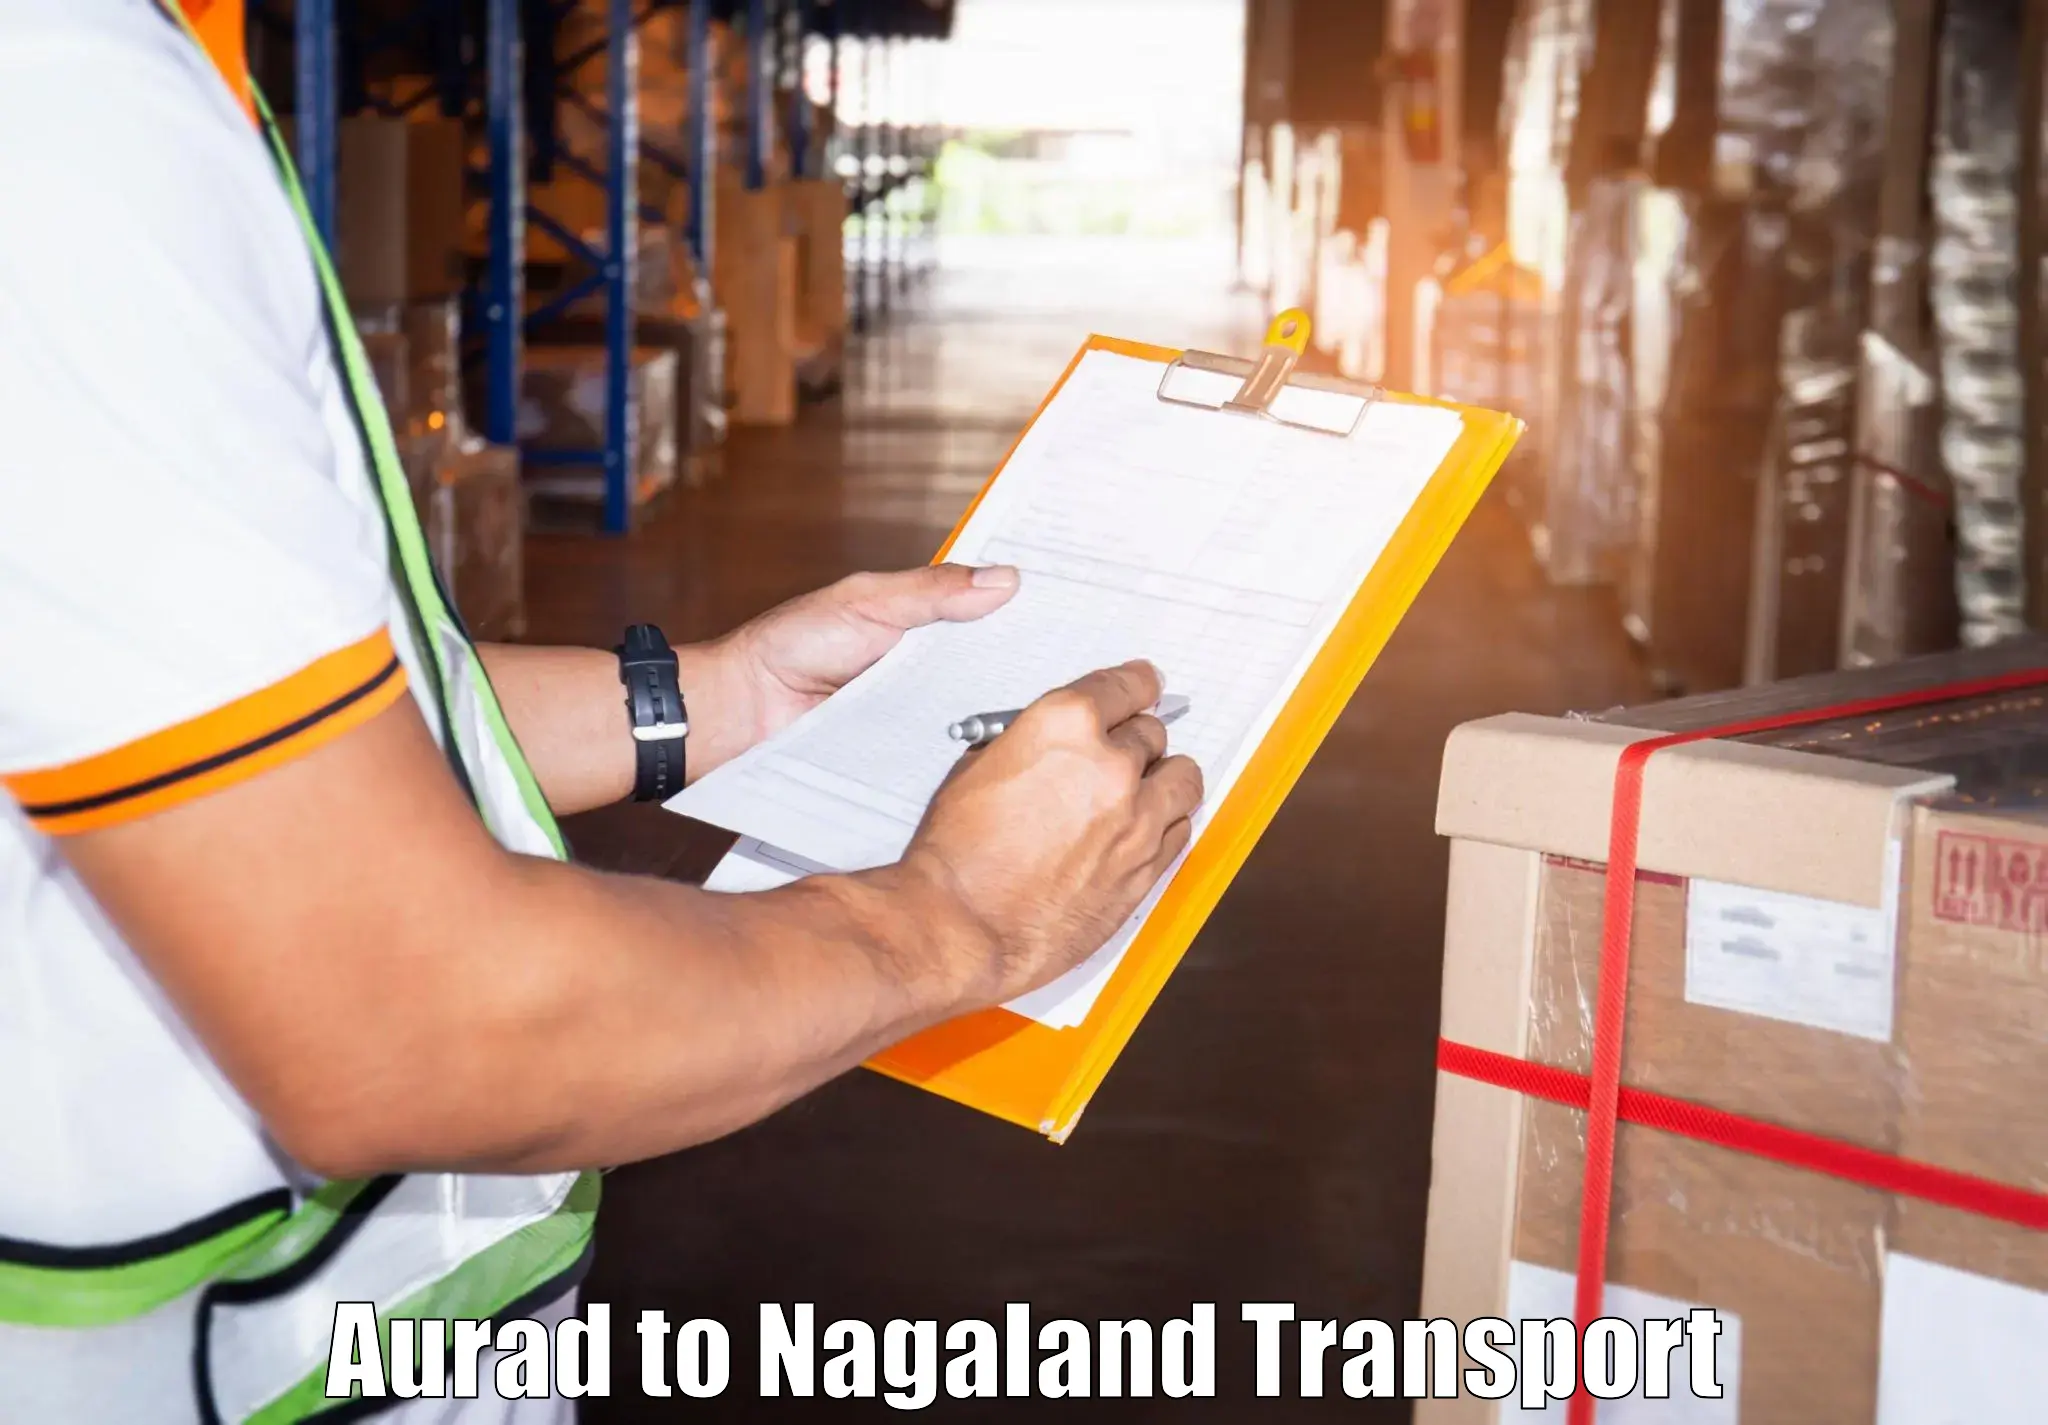 Online transport service Aurad to Nagaland